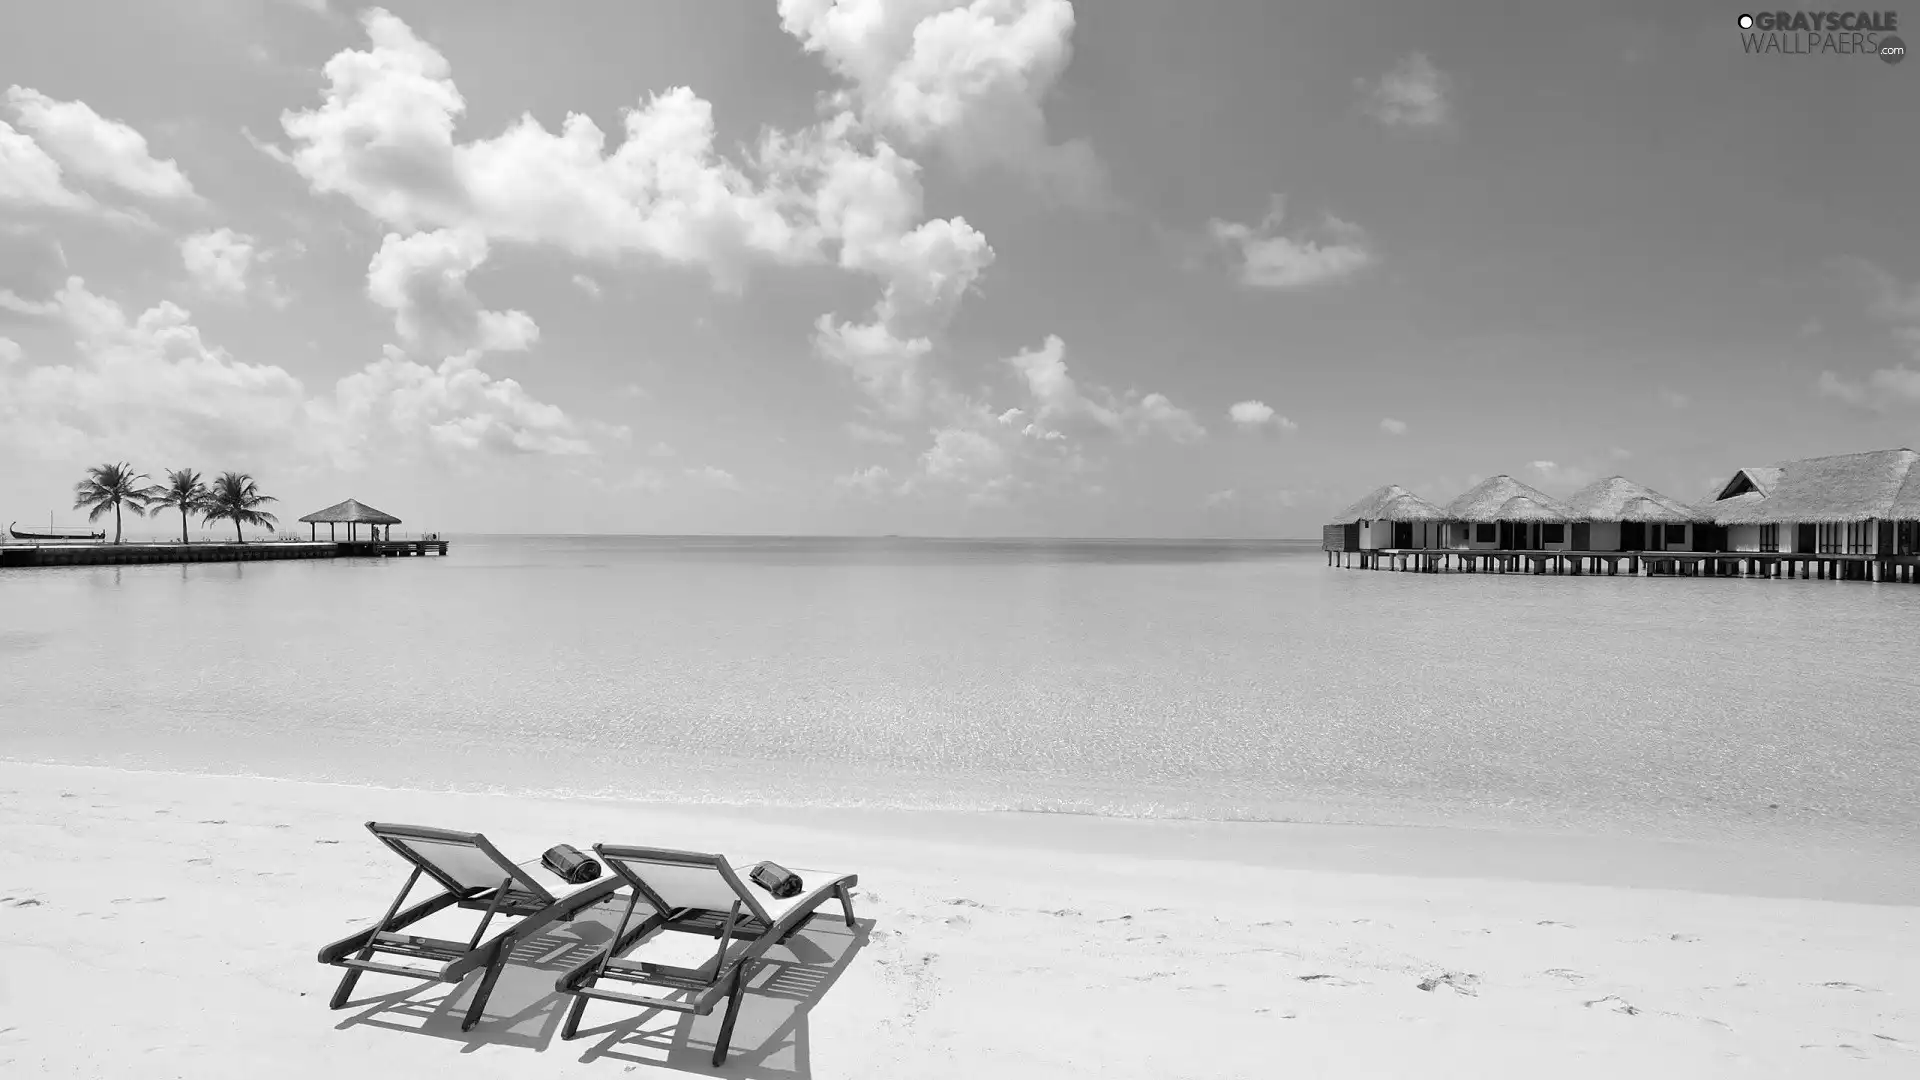 Houses, holiday, Beaches, deck chair, Ocean